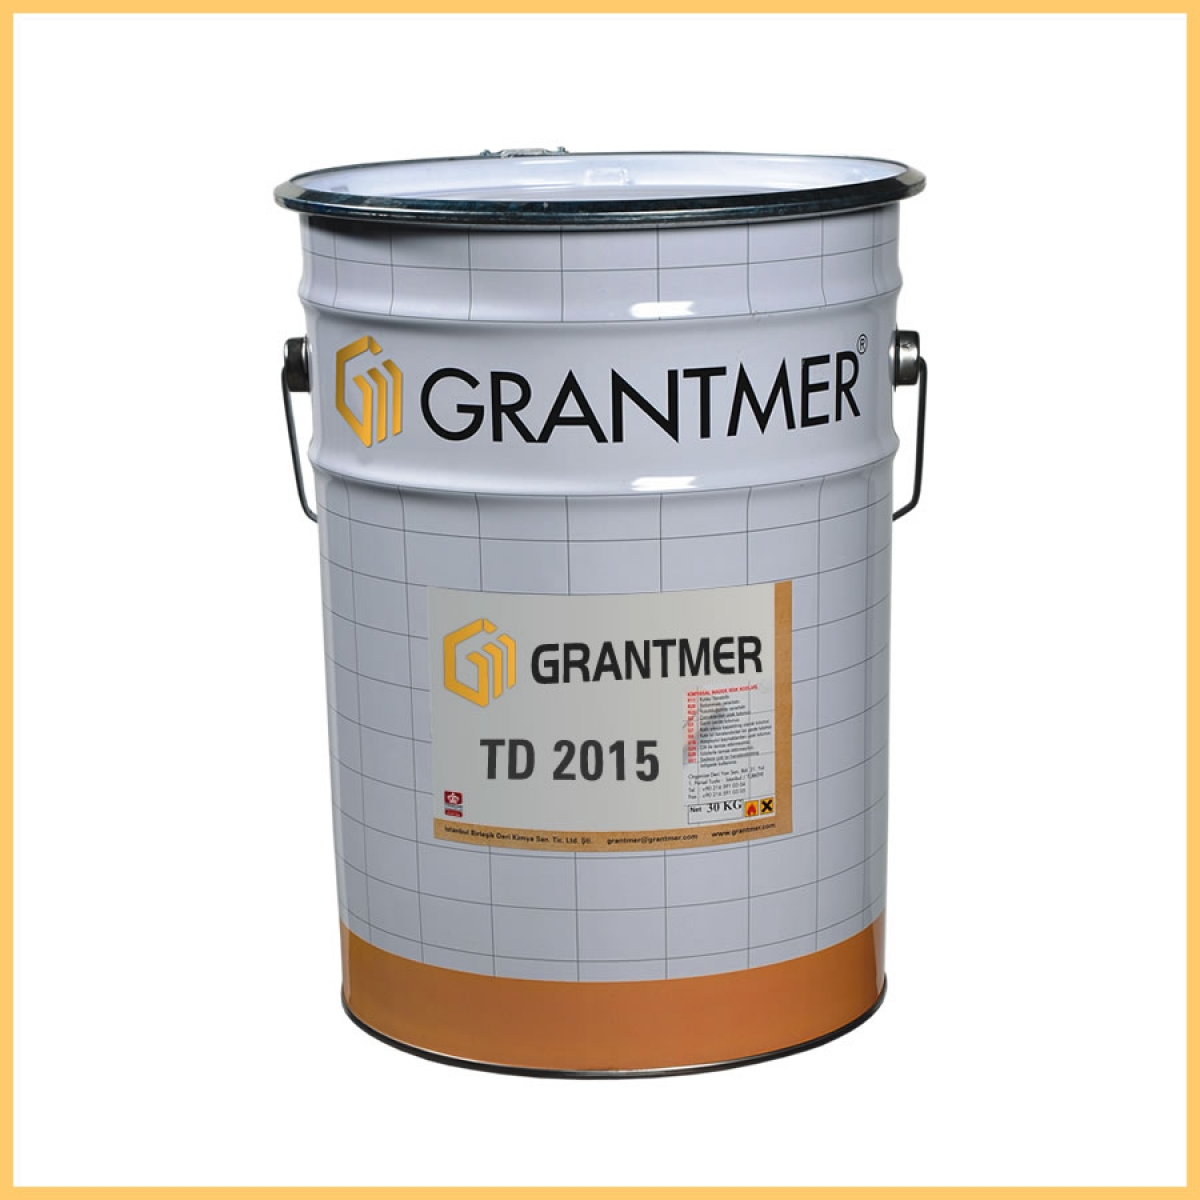 GRANTMER TD 2015